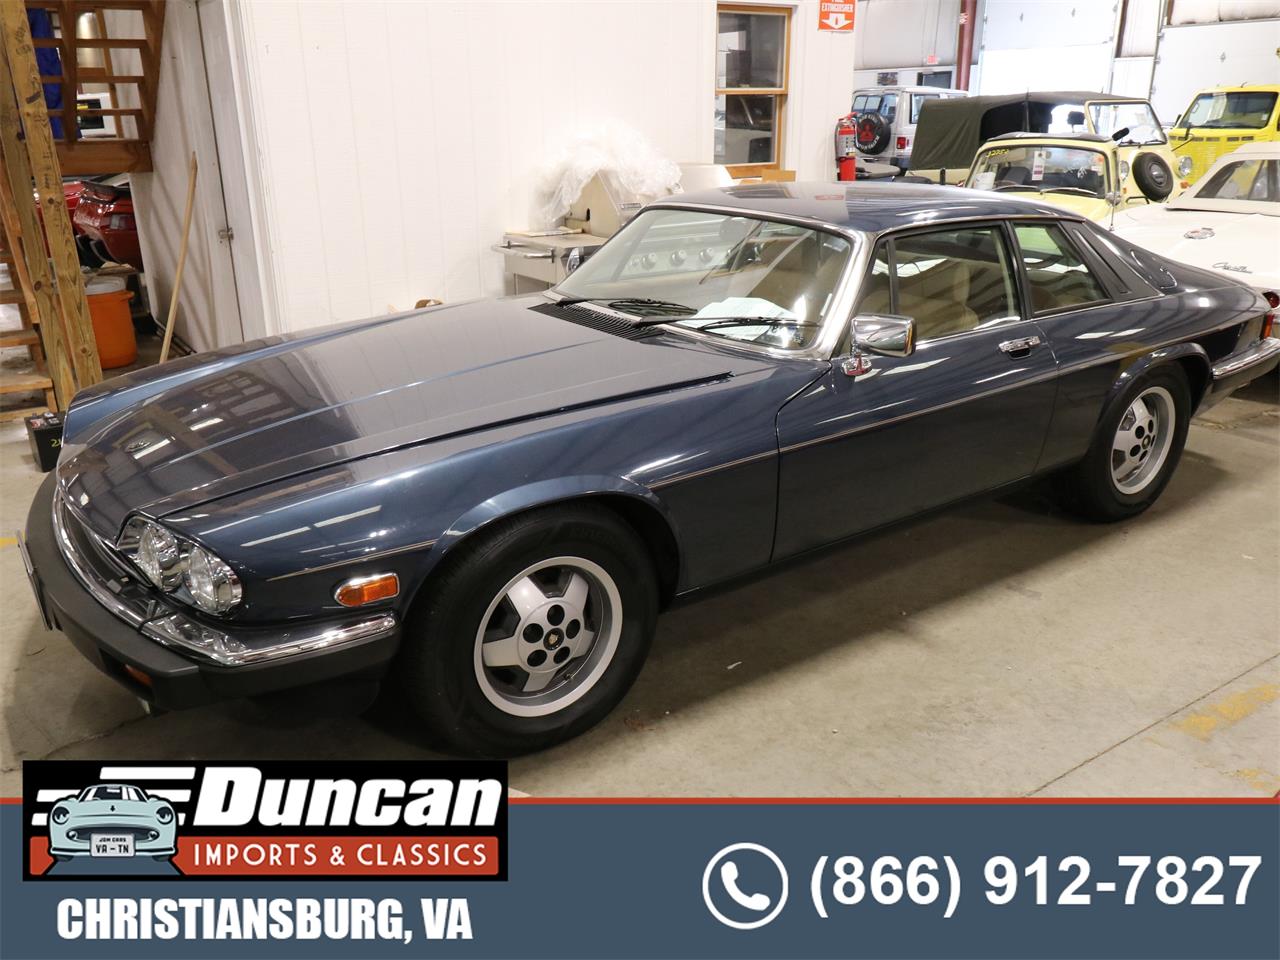 For Sale: 1986 Jaguar XJS in Christiansburg, Virginia for sale in Christiansburg, VA